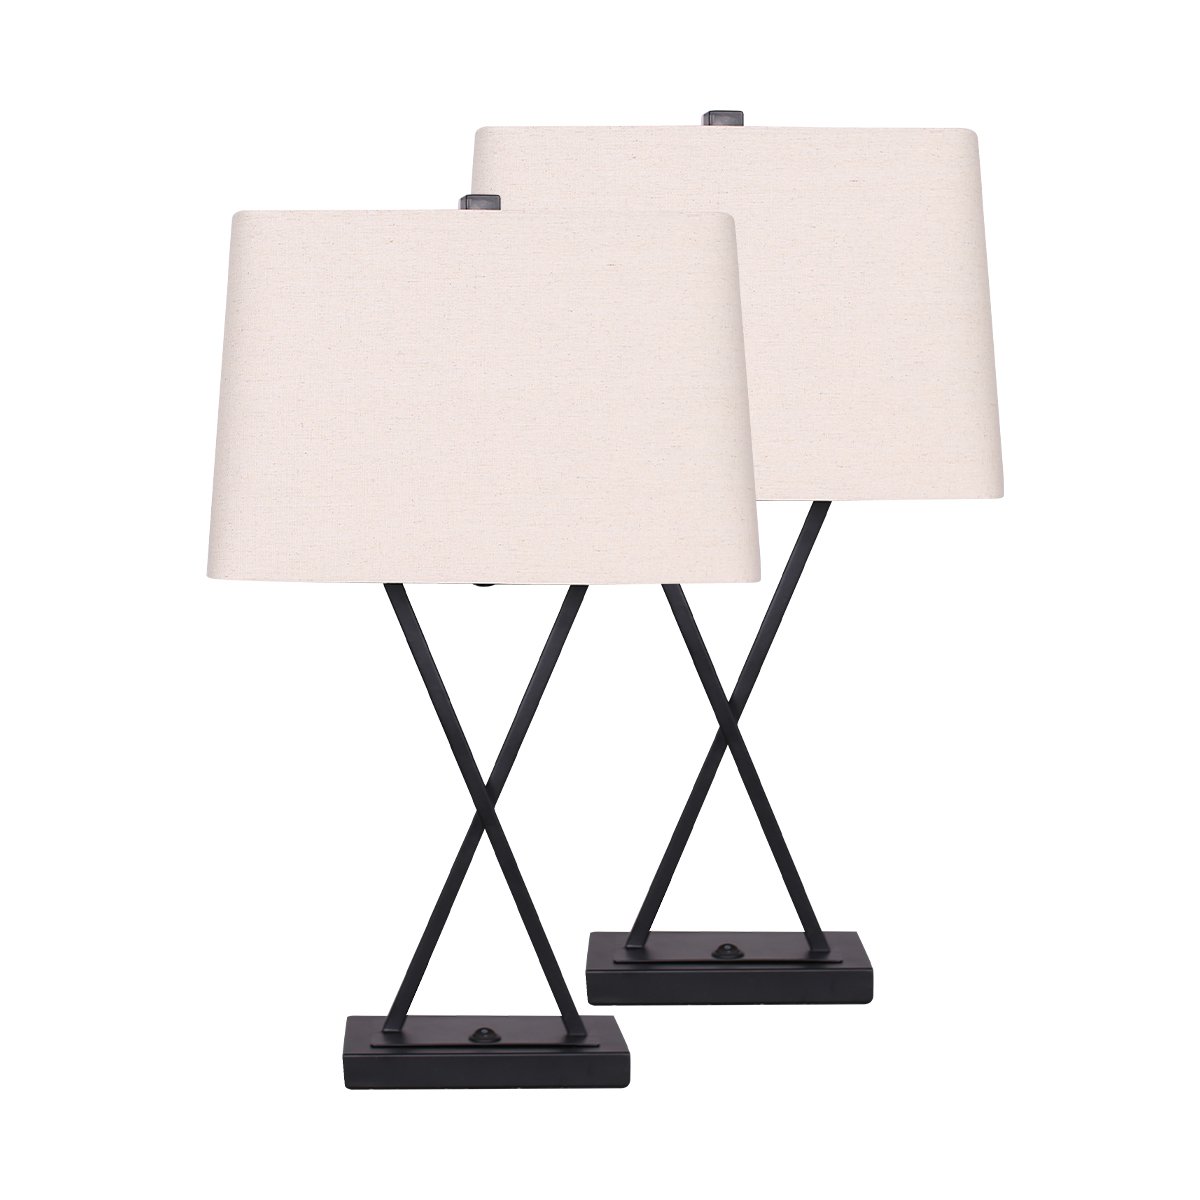 Sarantino Metal Table Lamp Rectangular Shade X Stand 2